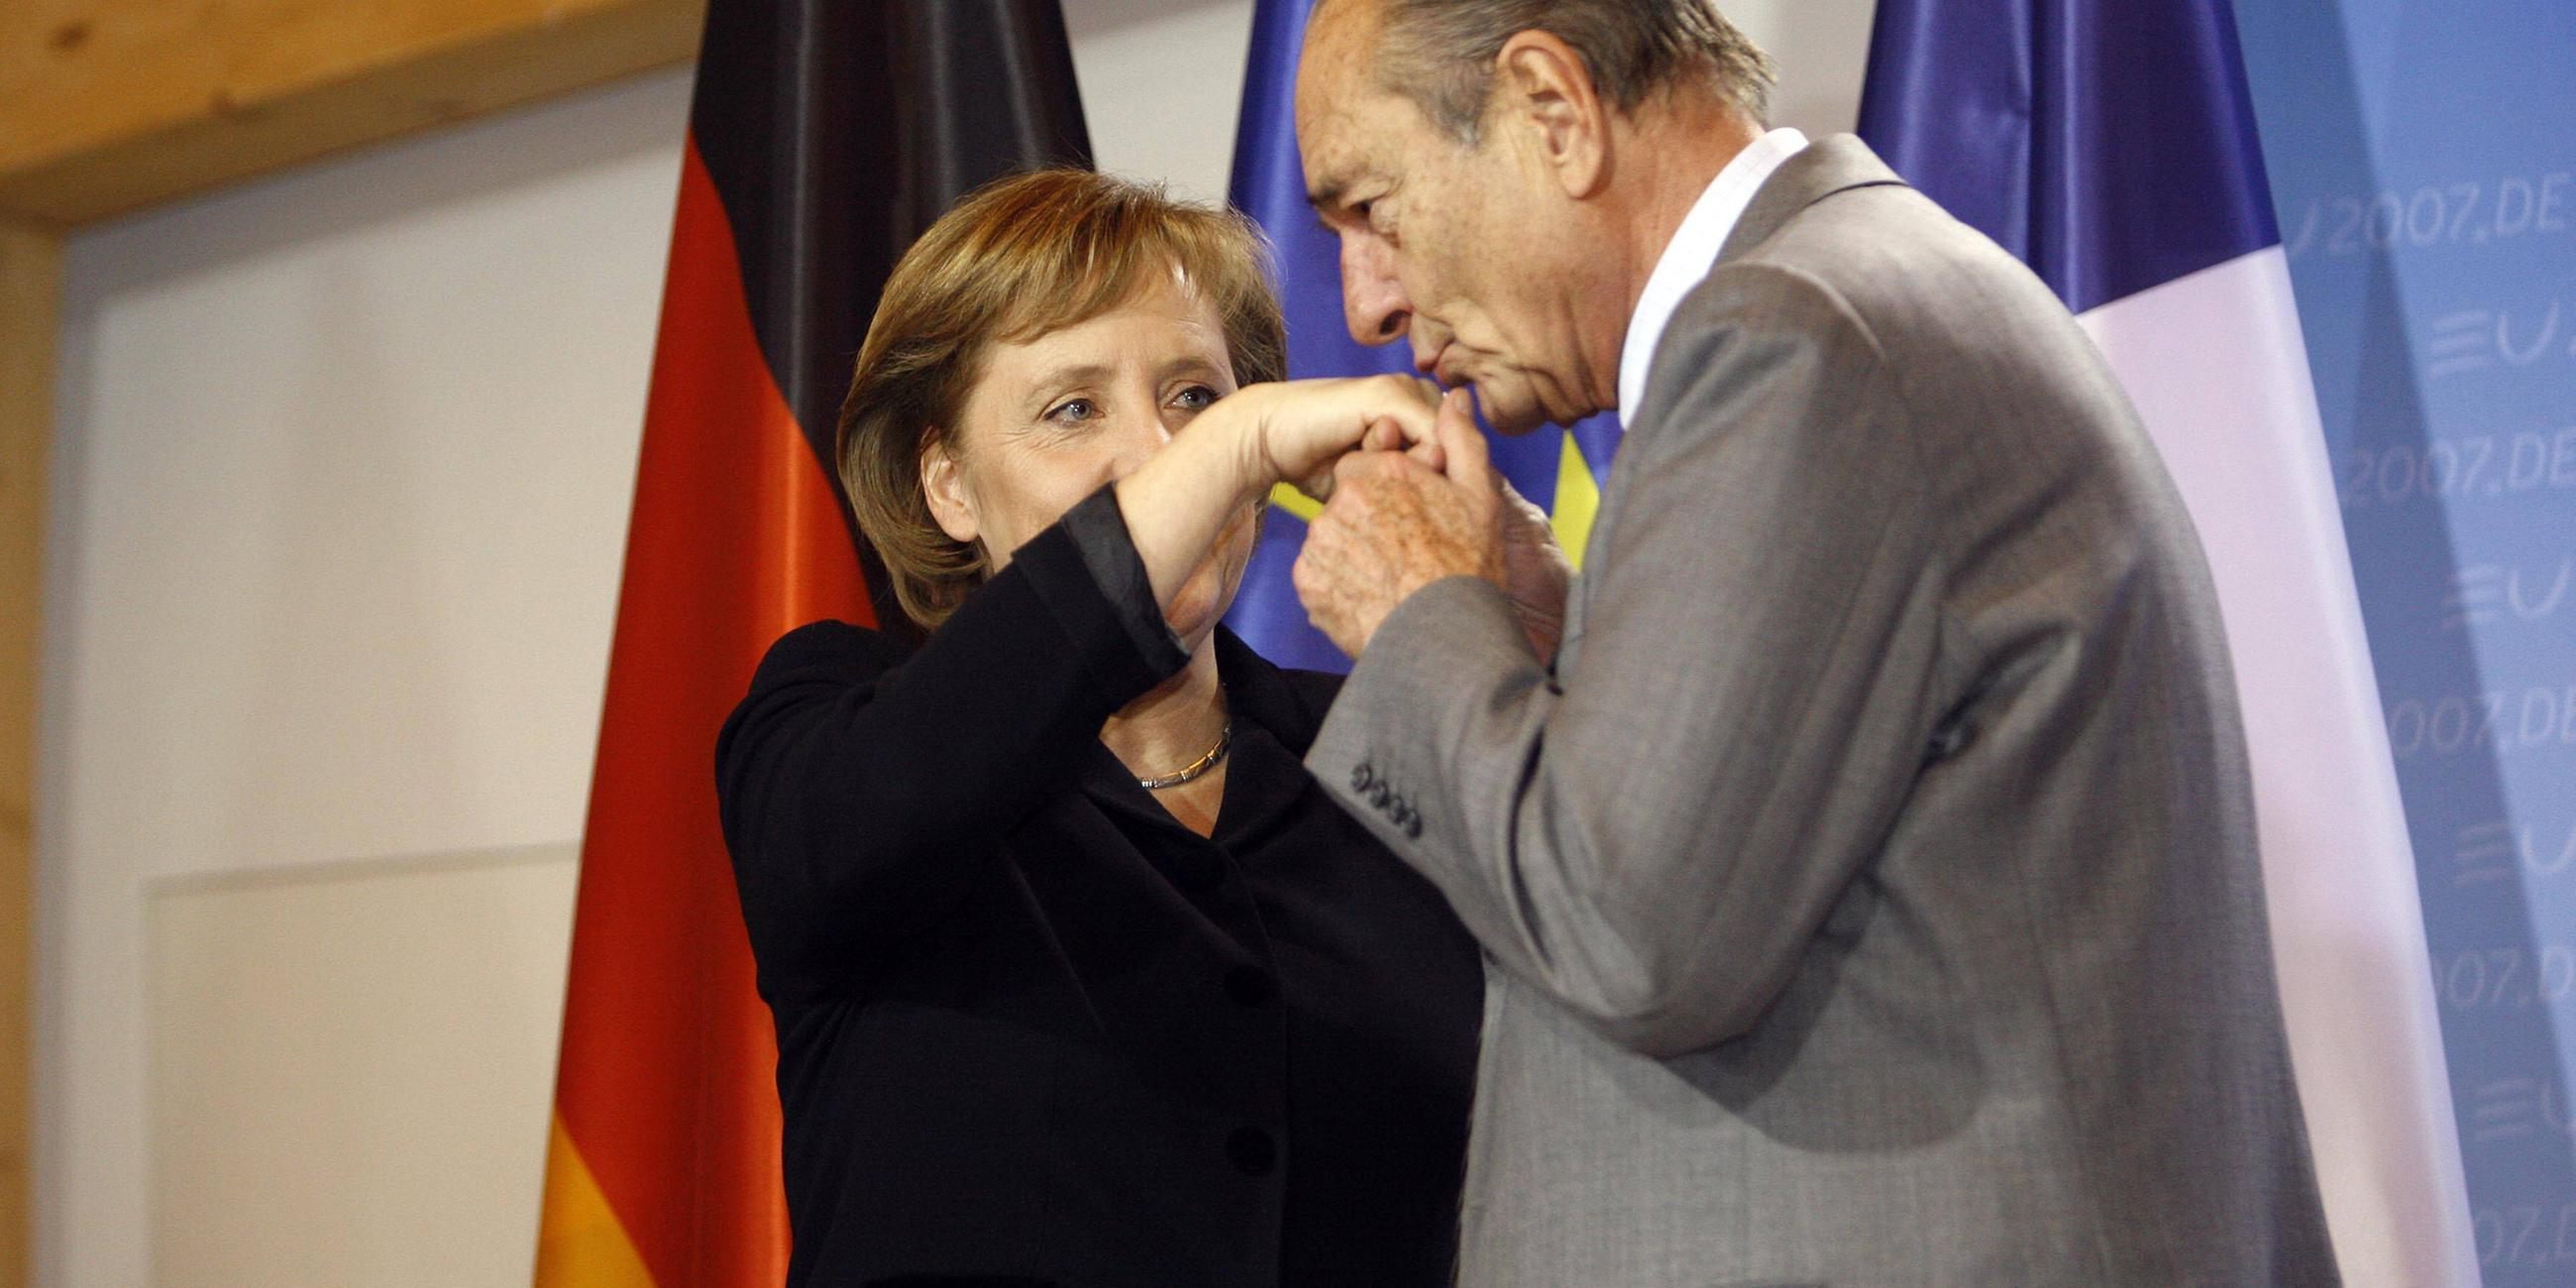 Archiv: Jacques Chirac und Nicolas Sarkozy am 24.02.2007 in Meseberg